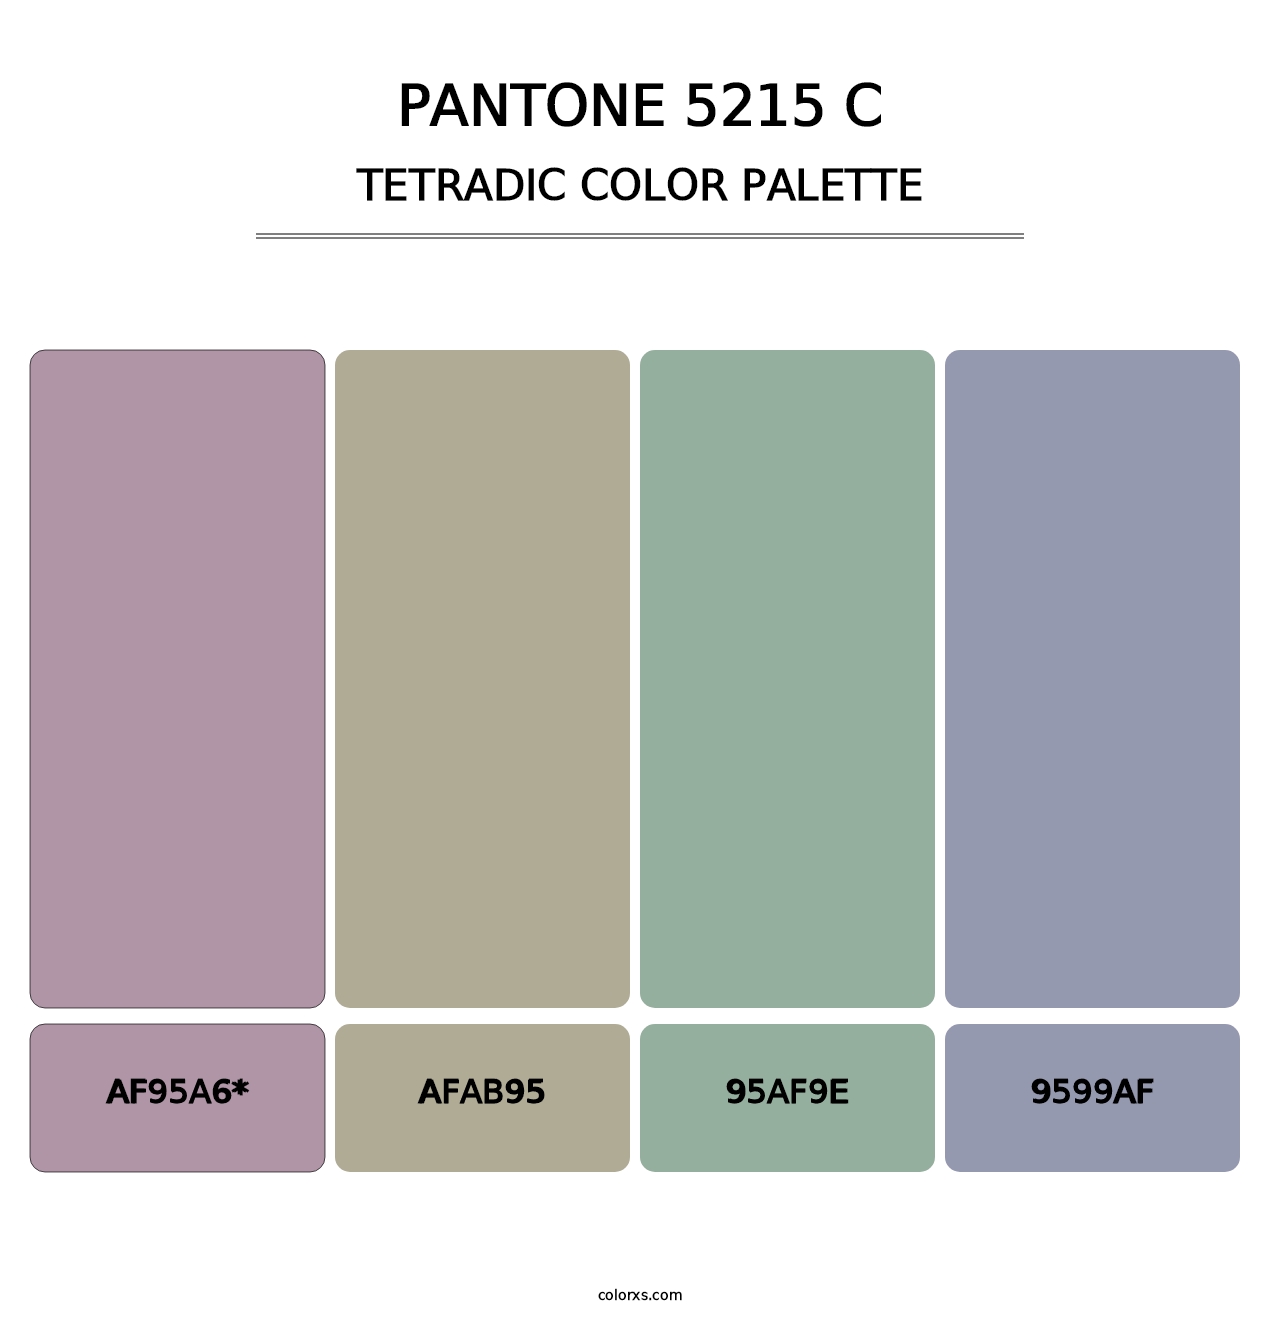 PANTONE 5215 C - Tetradic Color Palette